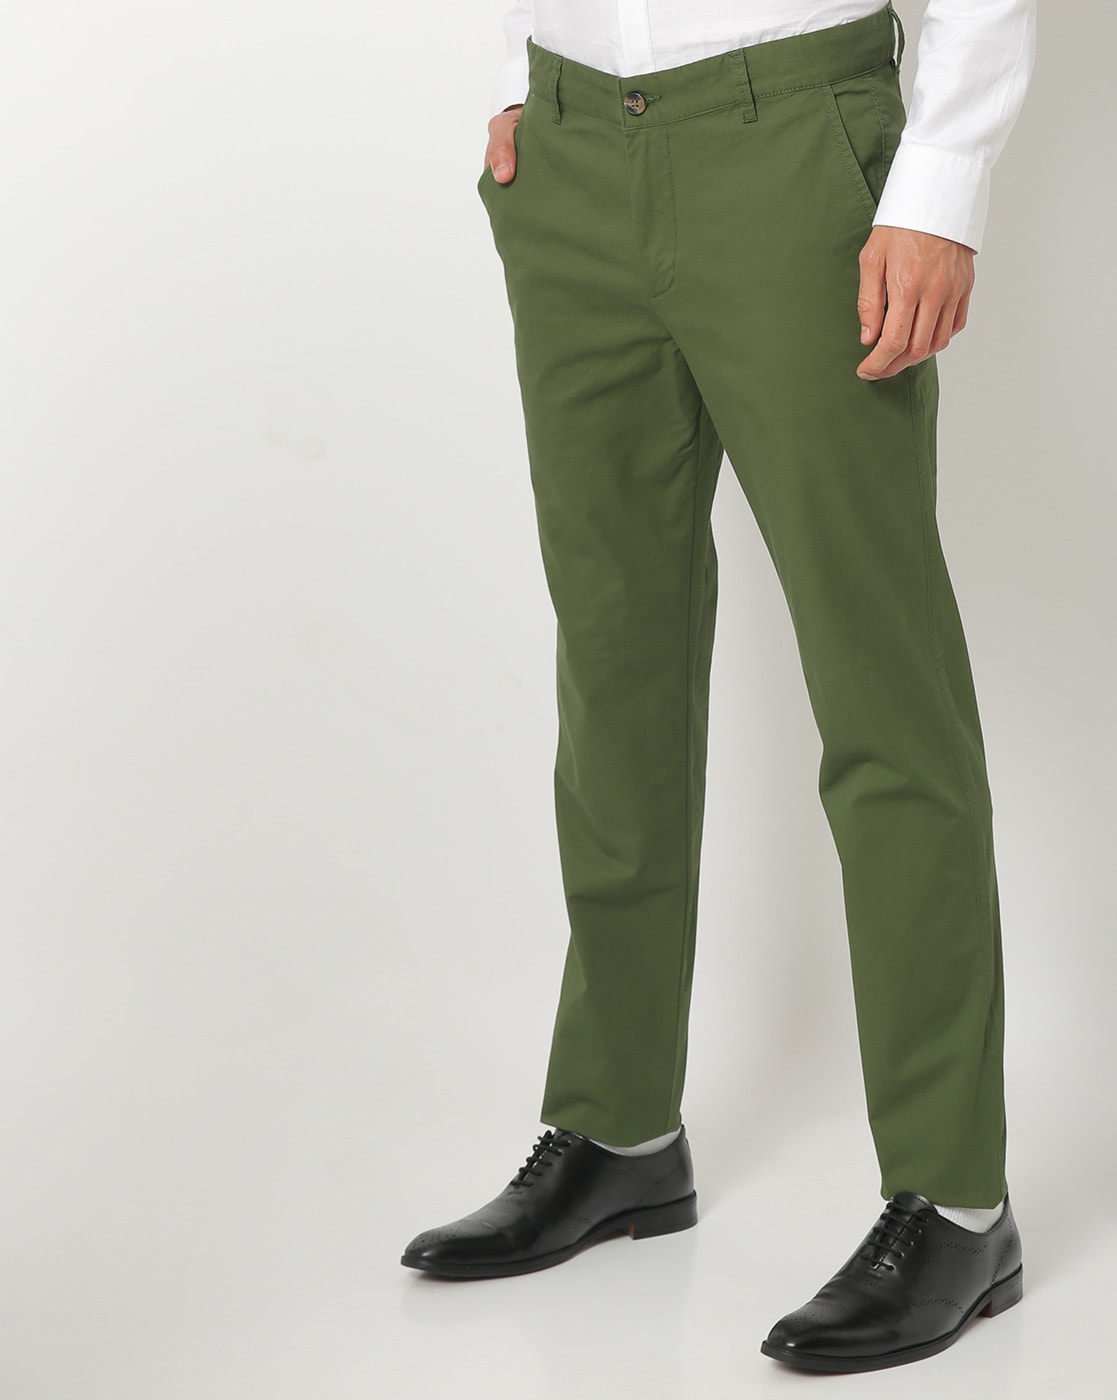 Buy Khaki Trousers & Pants for Men by PINE REPUBLIC Online | Ajio.com